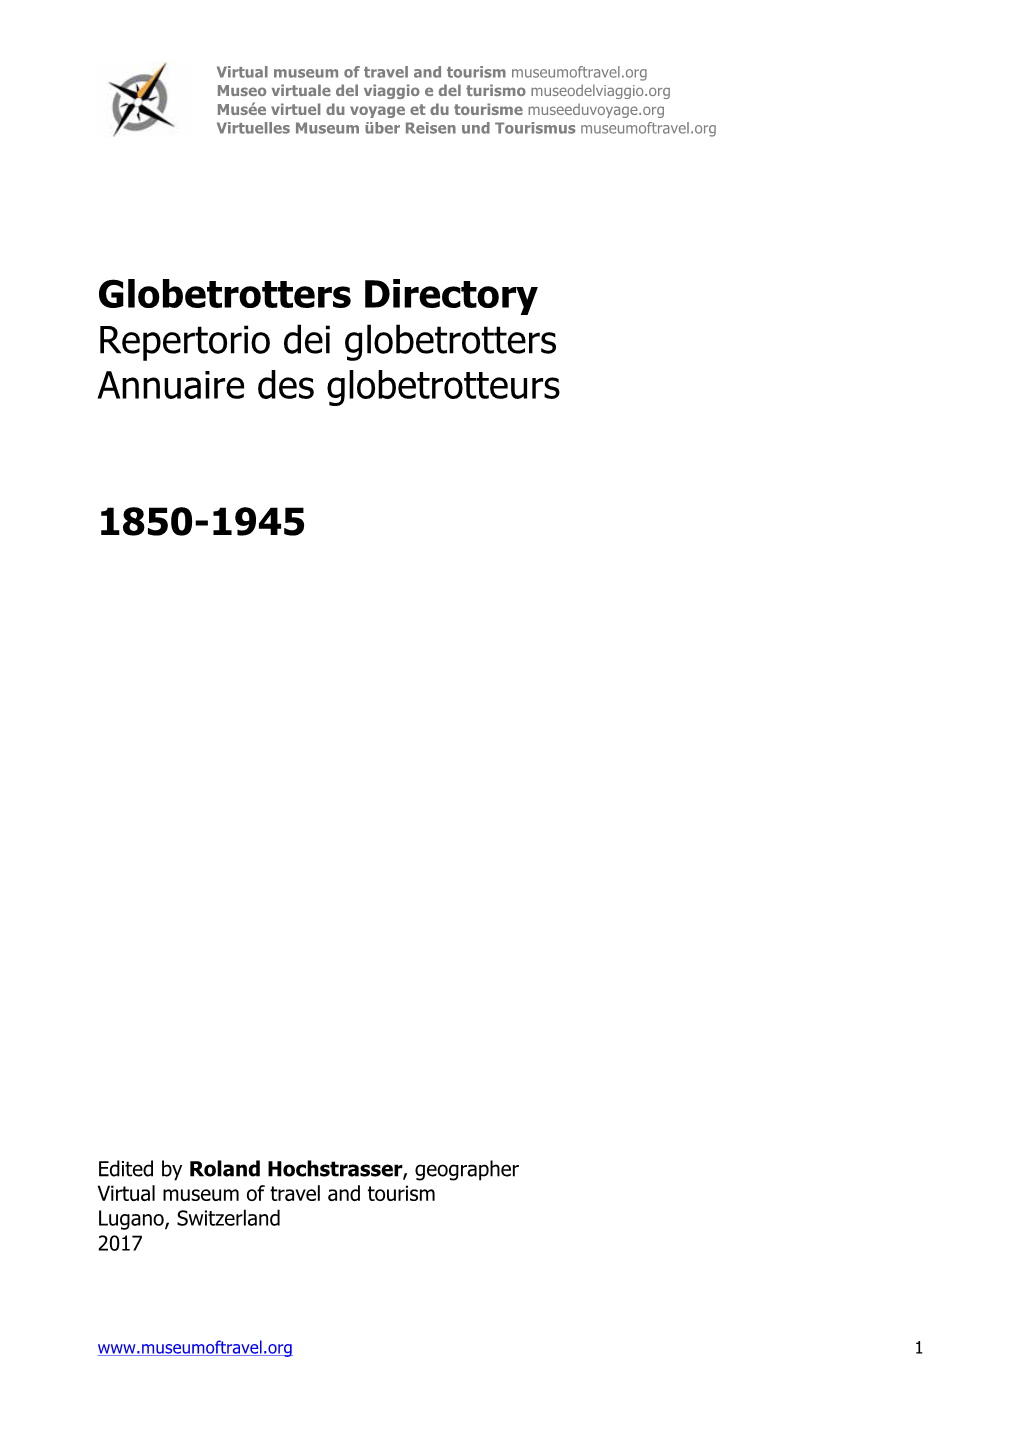 Globetrotters Directory Repertorio Dei Globetrotters Annuaire Des Globetrotteurs